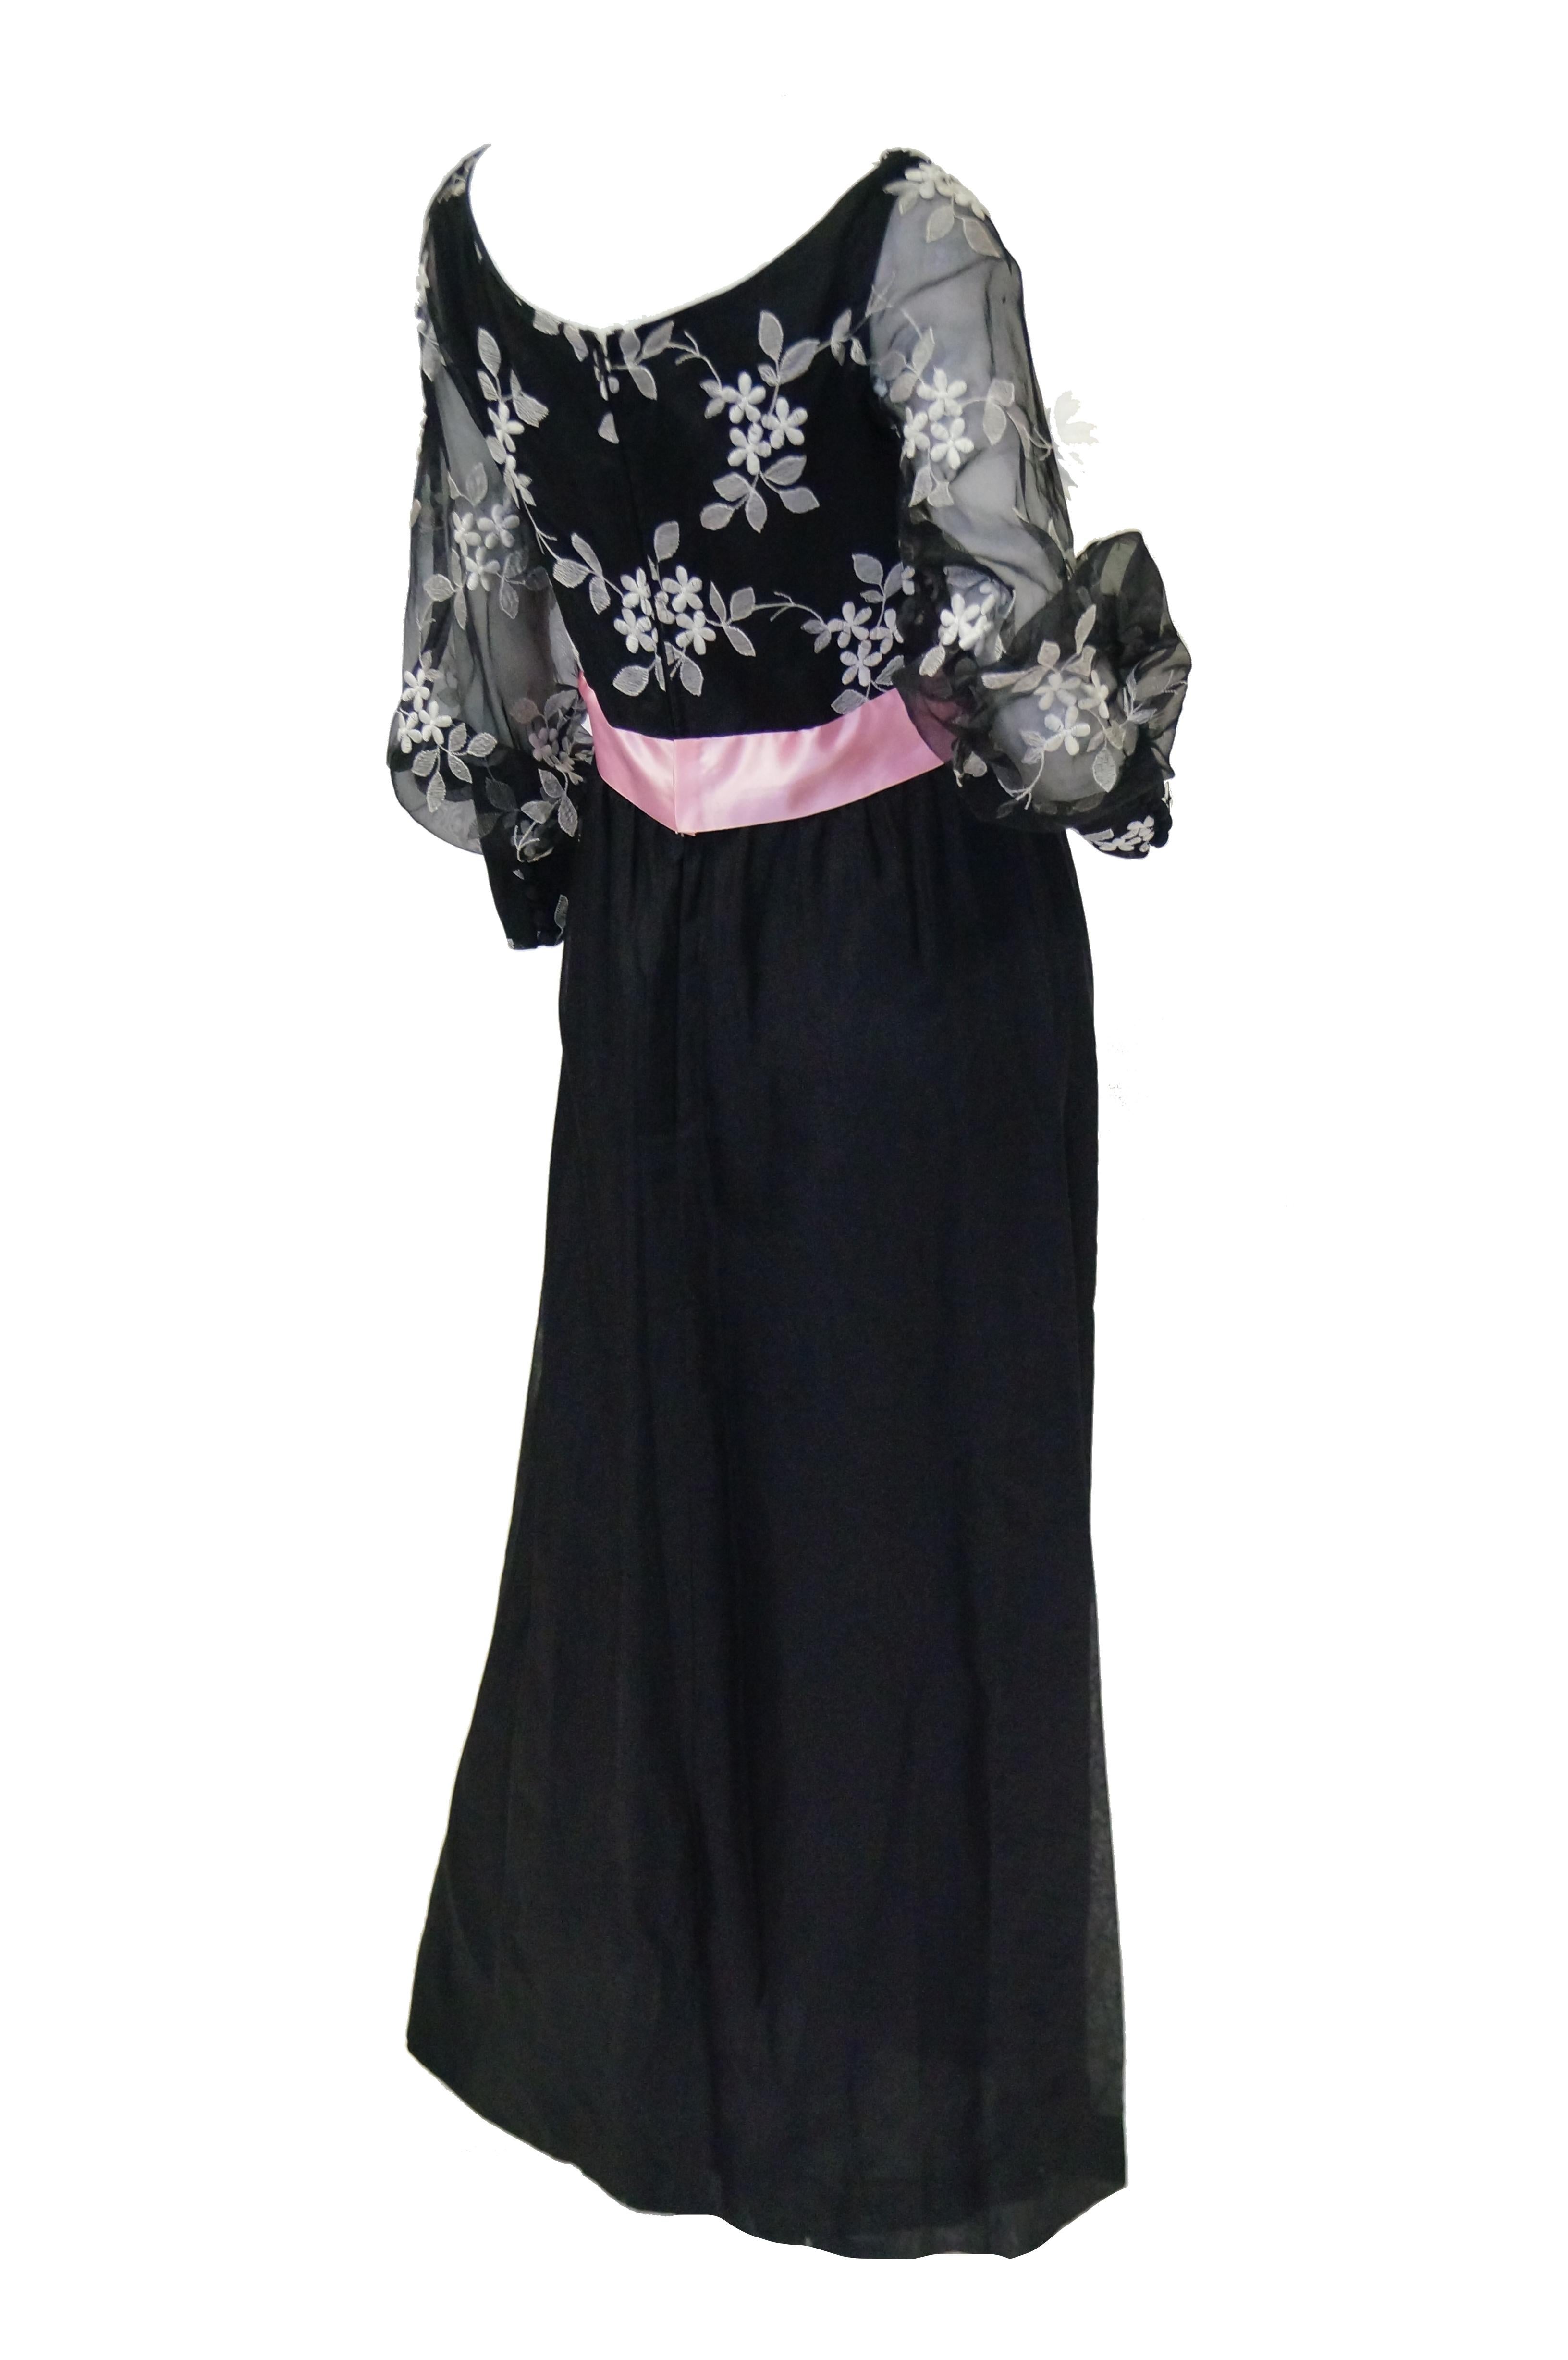 1960s Geoffrey Beene Black Evening Dress w/ White Floral Details & Pink Ribbon For Sale 2